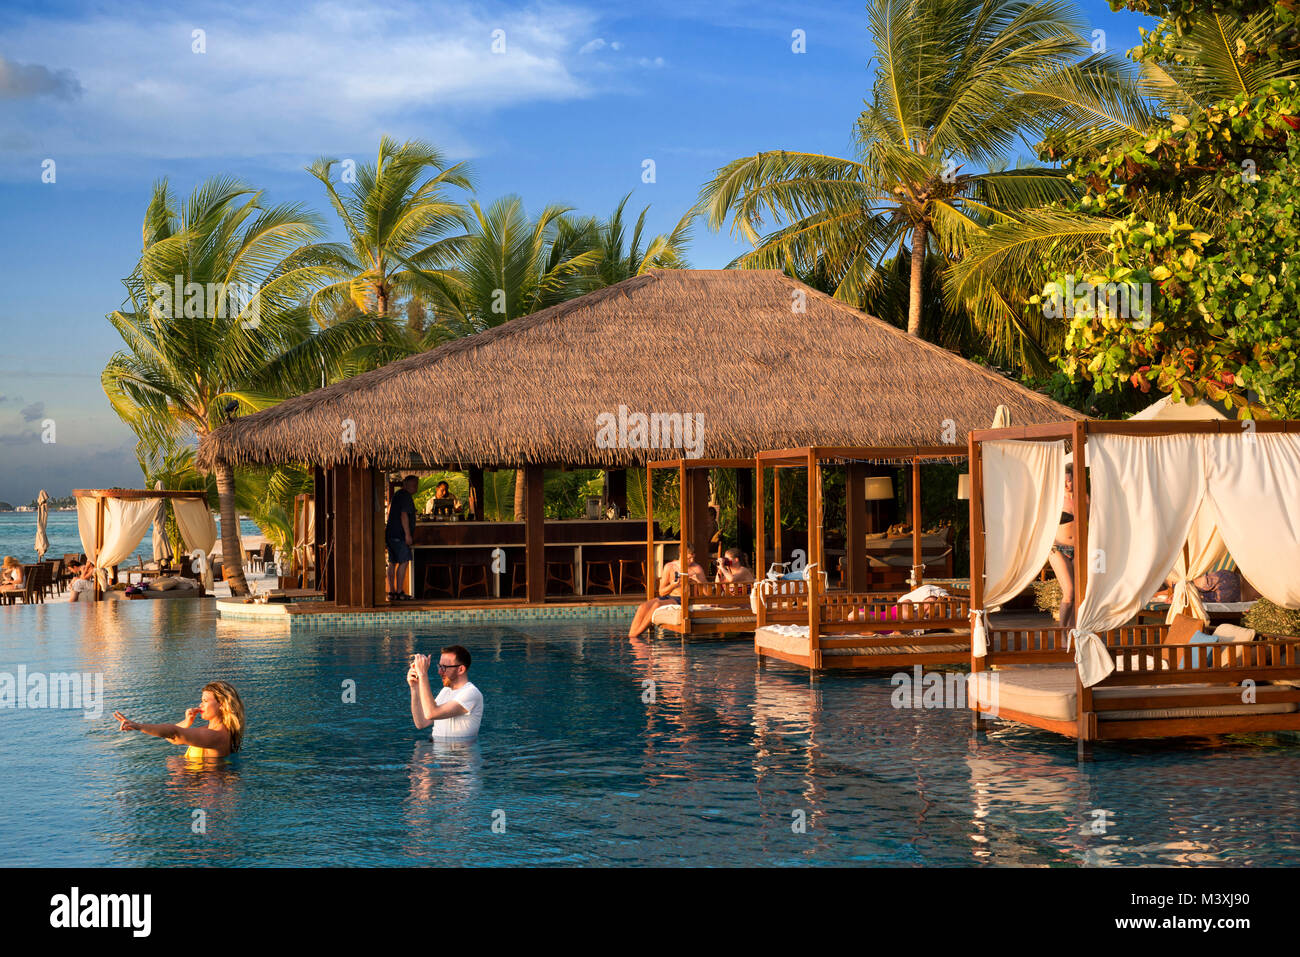 Swimming pool and restaurant in The Residence Hotel and Resort, Gaafu Alifu Atoll. Maldives Islands. Stock Photo